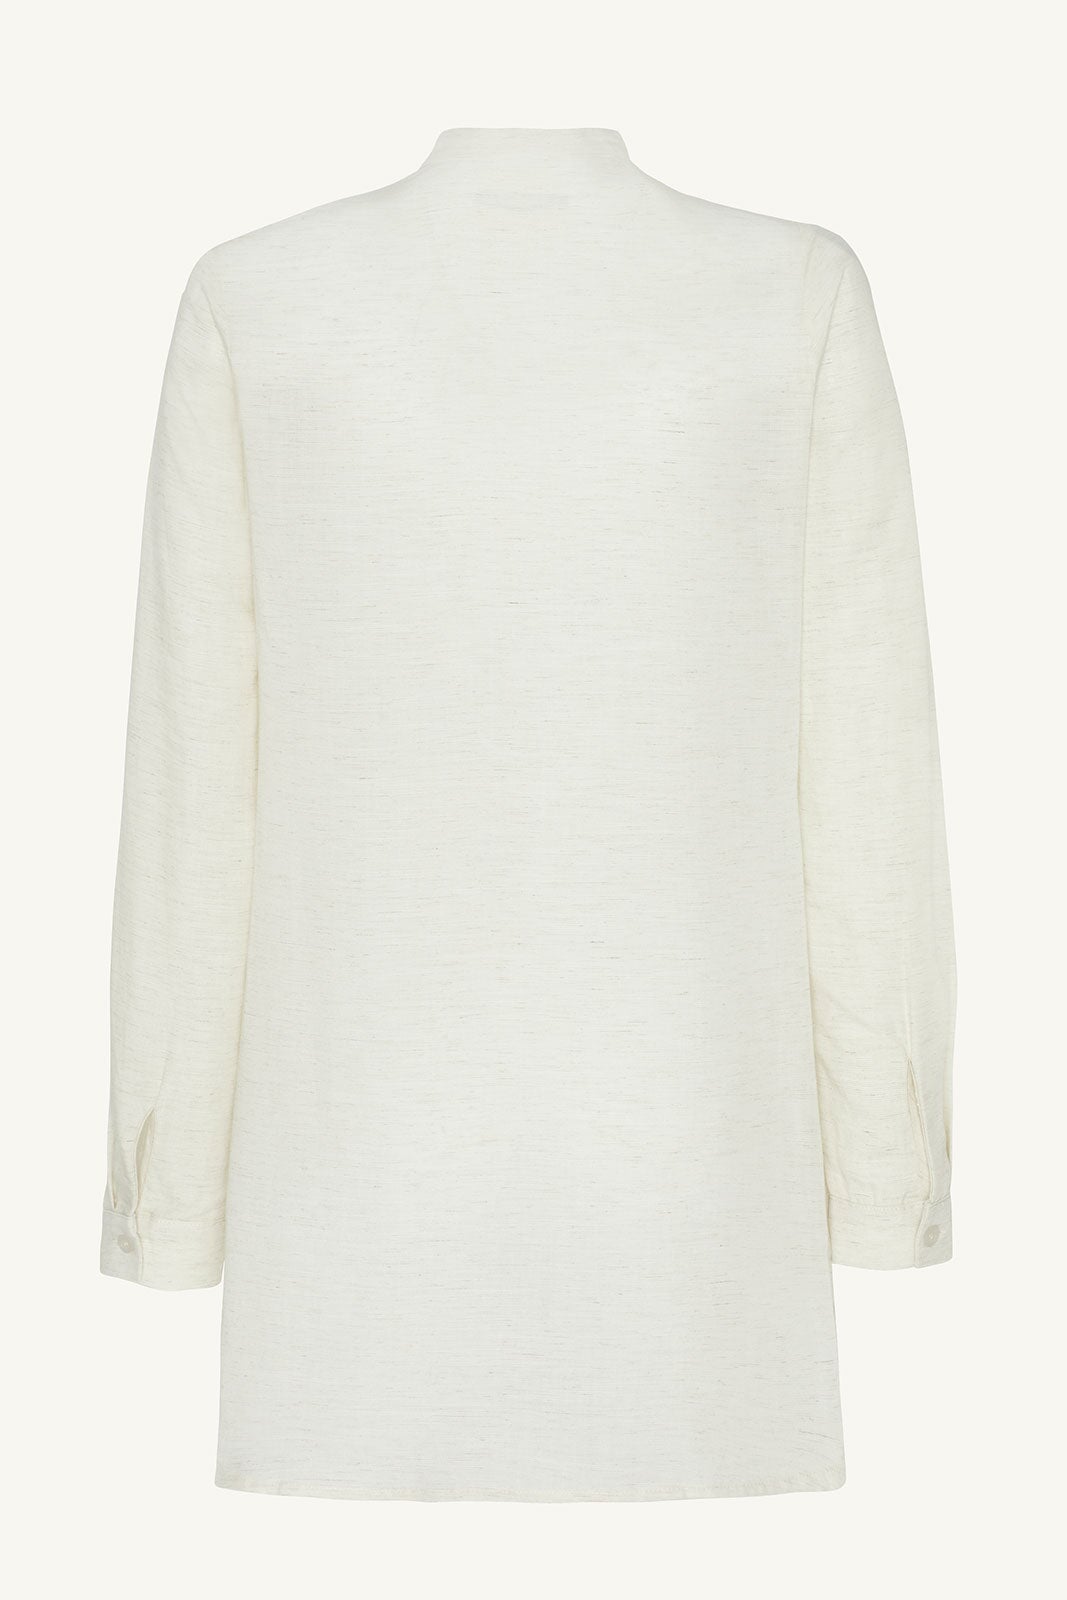 Lamia Cotton Linen Button Down Top - White Clothing epschoolboard 